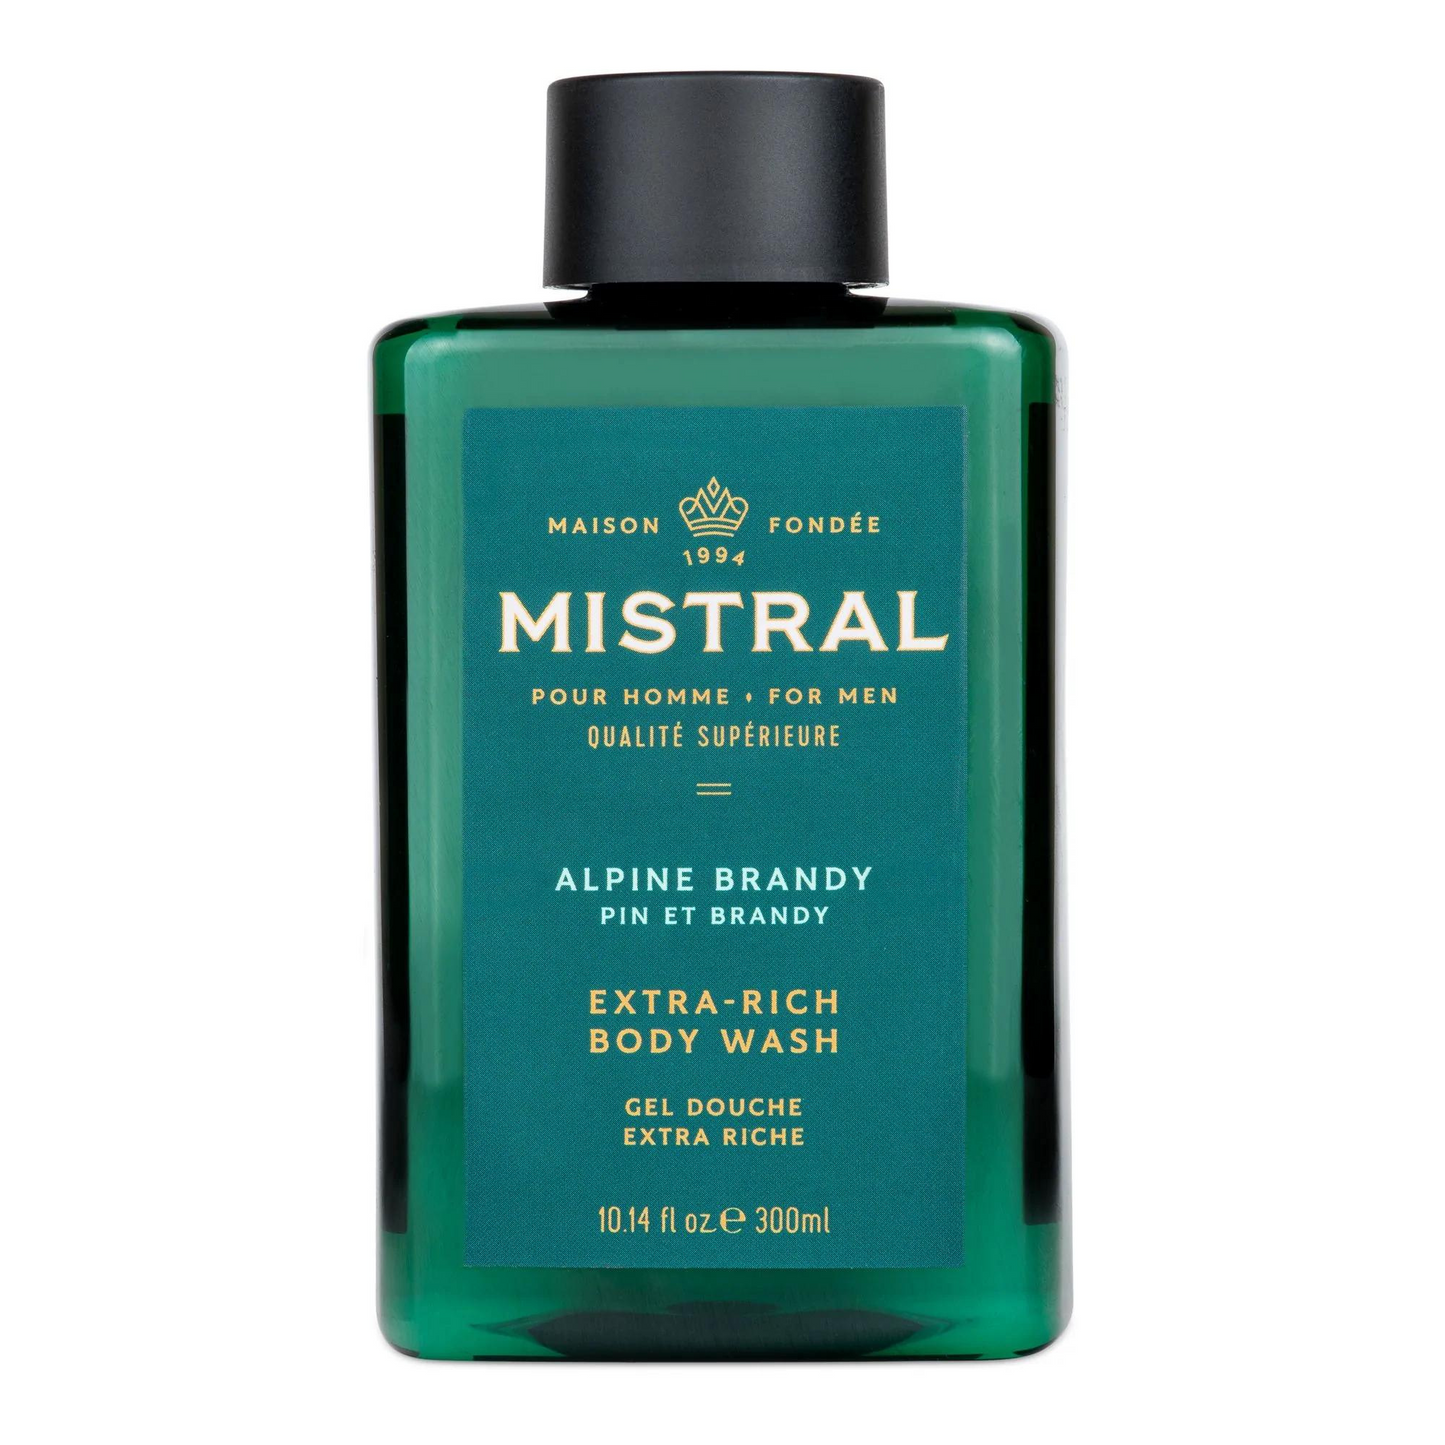 Primary Image of Mistral Alpine Brandy Body Wash (10.14 fl oz)